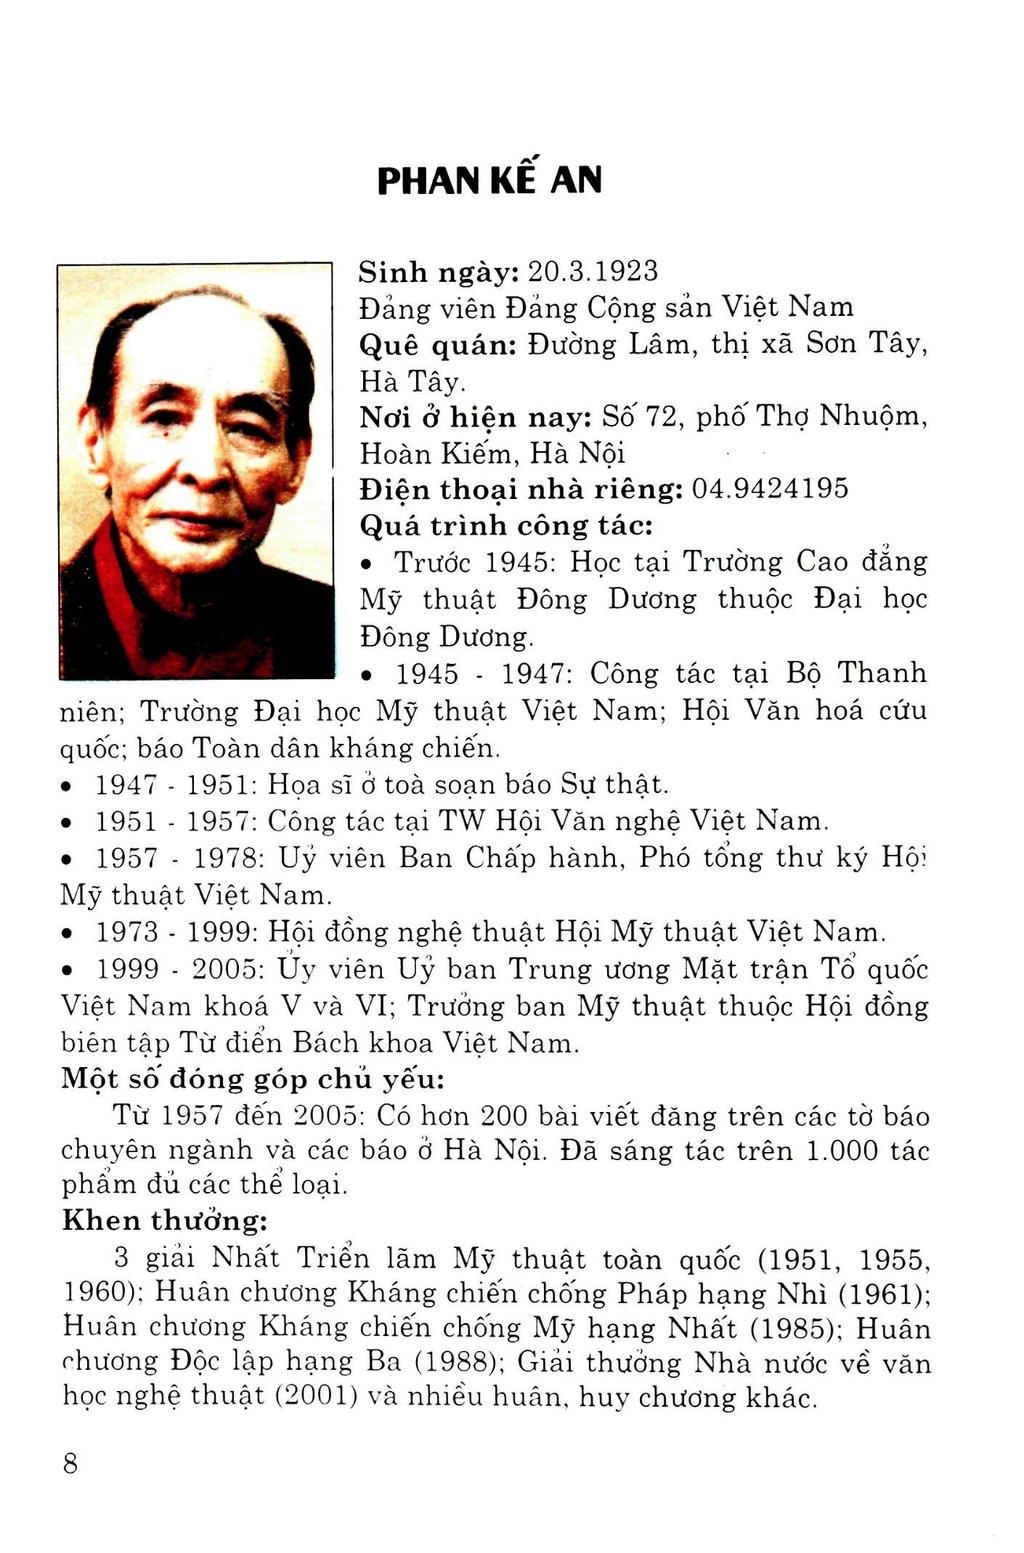 PHAN KE AN Sinhngay: 20.3.1923 Dang vien Dang Cong san Viet Nam Que quan: DUdng Lam, thi xa Sdn Tay, Ha Tay. Ndi of hien nay: So'72, pho Thd Nhuom, Hoan Kiem, Ha Noi Dien thoai nha rieng: 04.